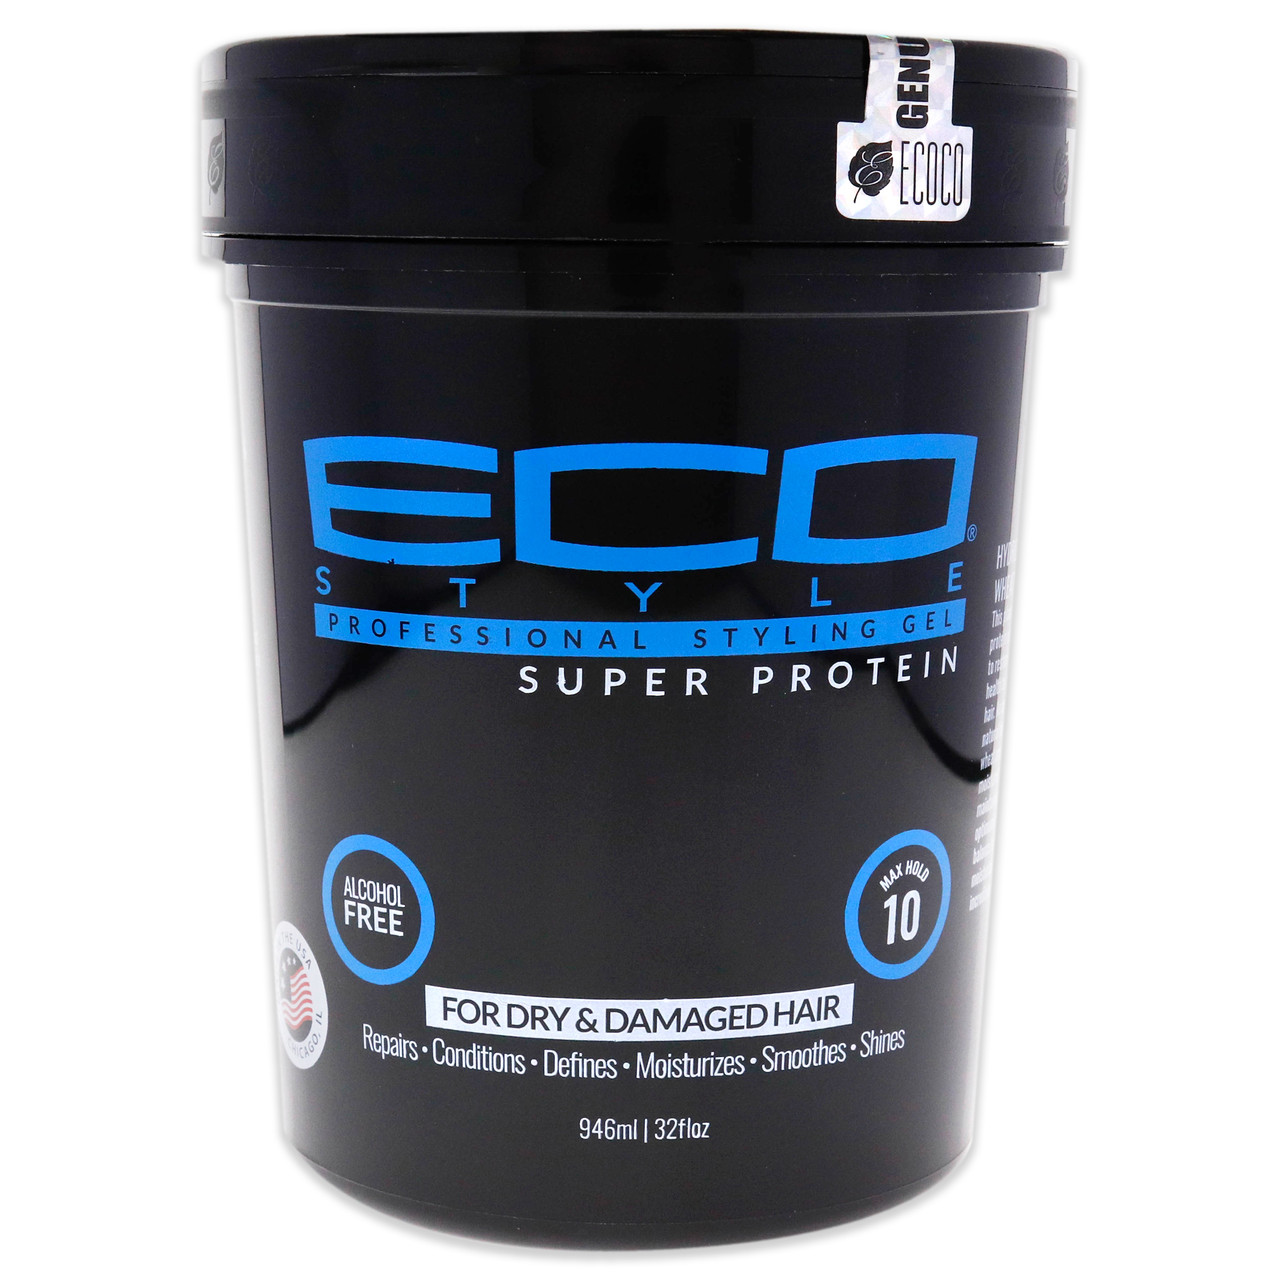 Eco Styling Gel Black [Super Protein] (32oz) - Black Beauty Supply